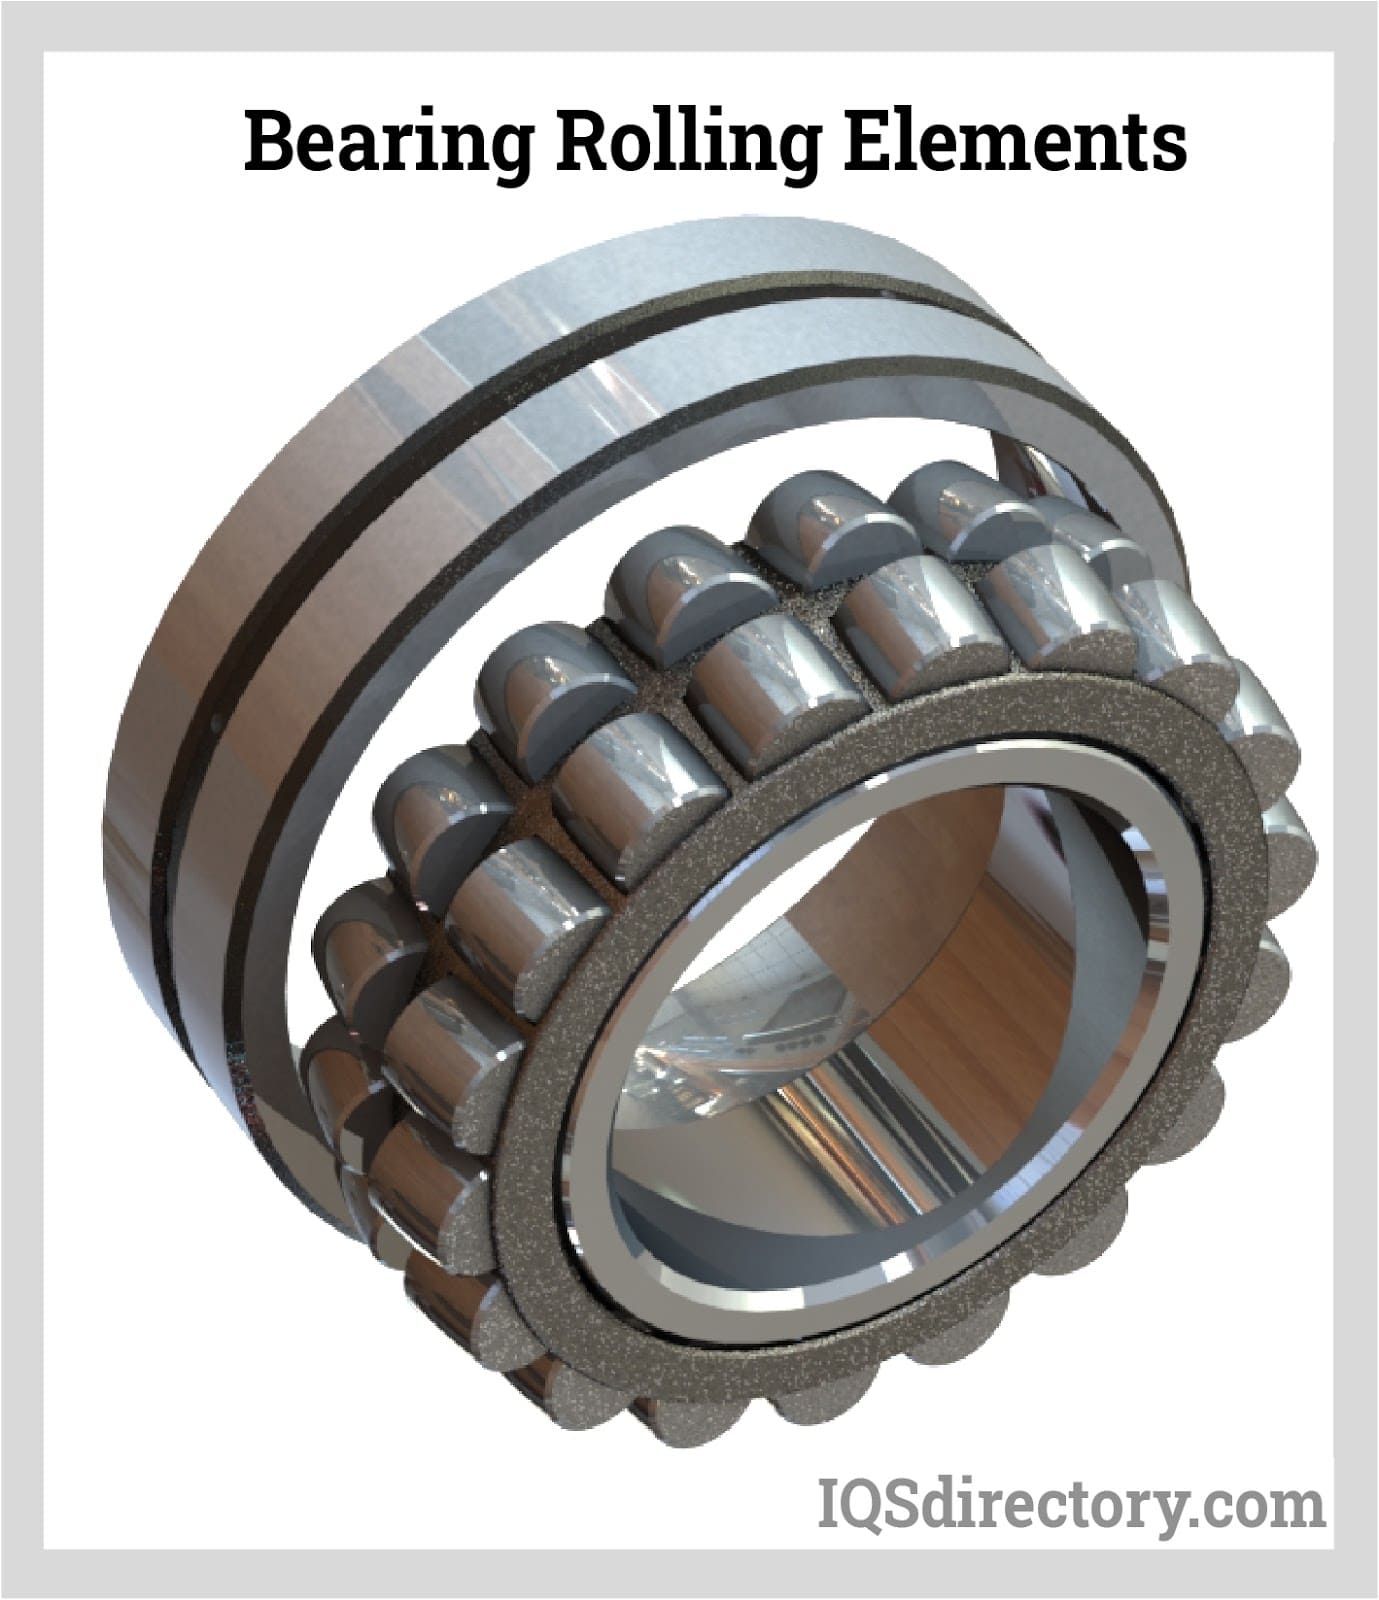 Bearing Rolling Elements